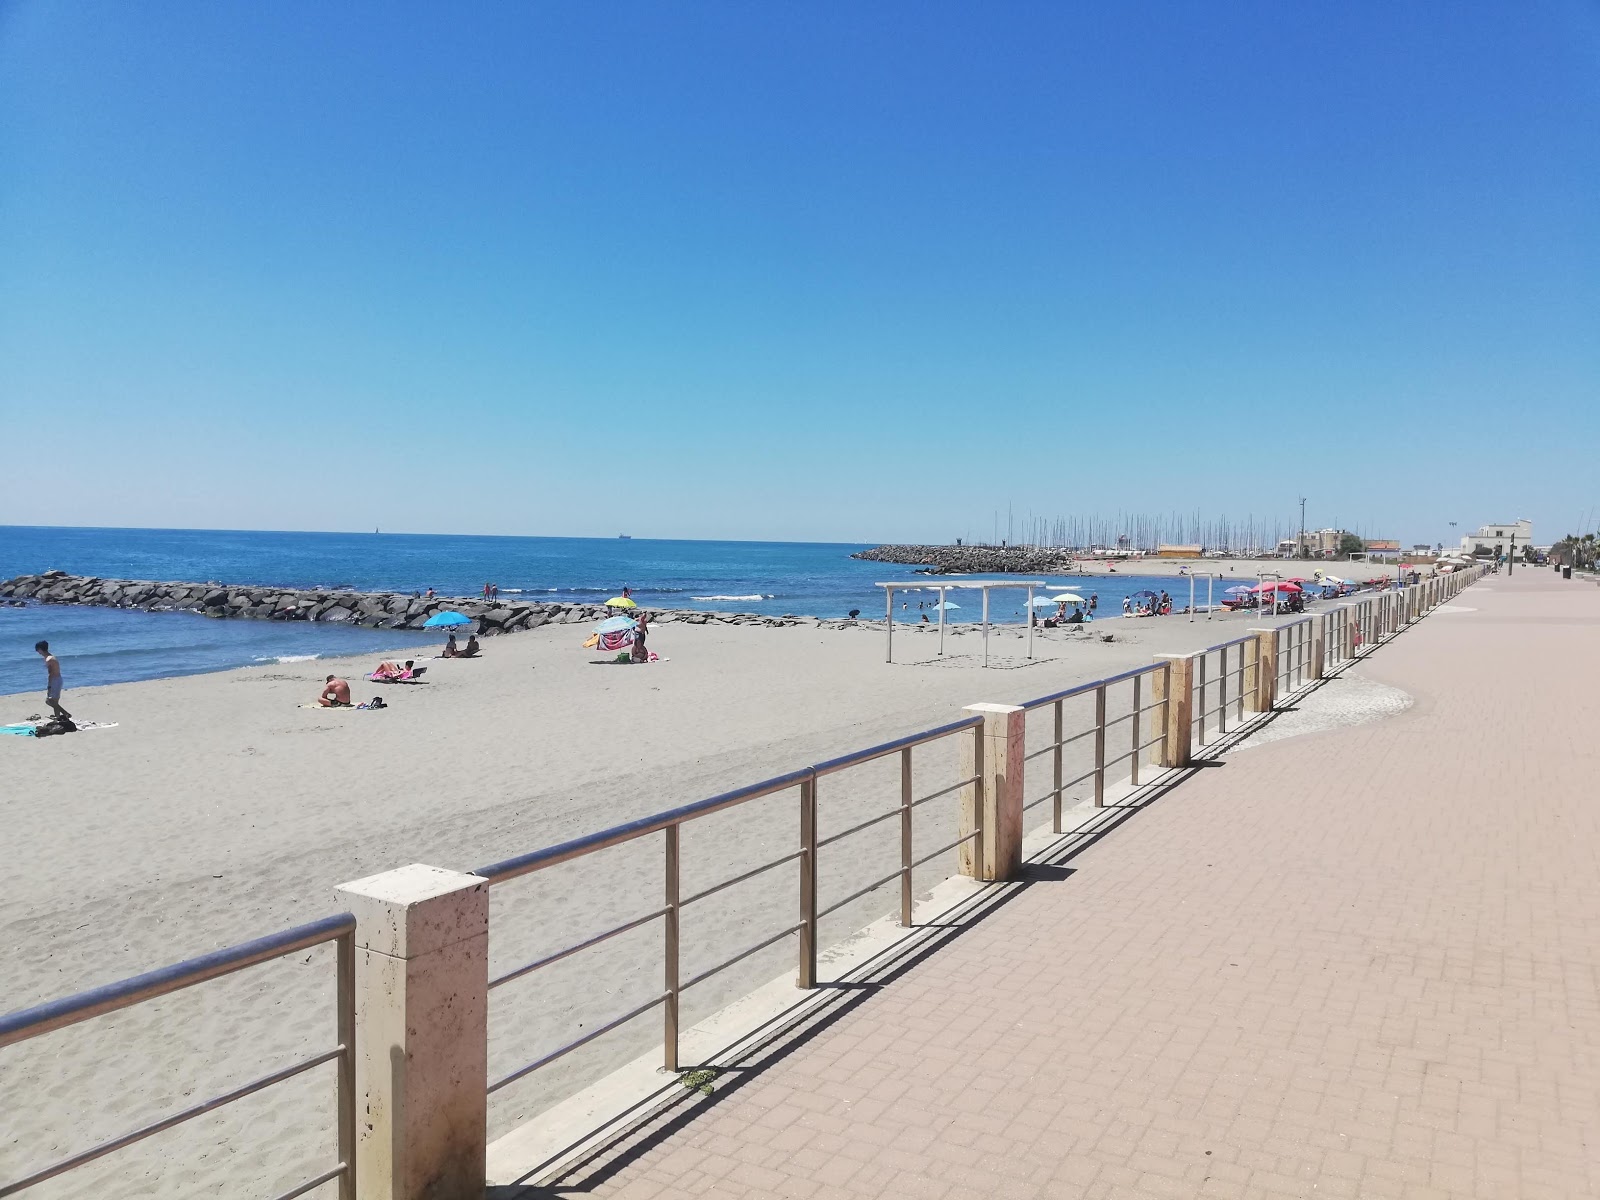 Foto af Ostia beach strandferiestedet område